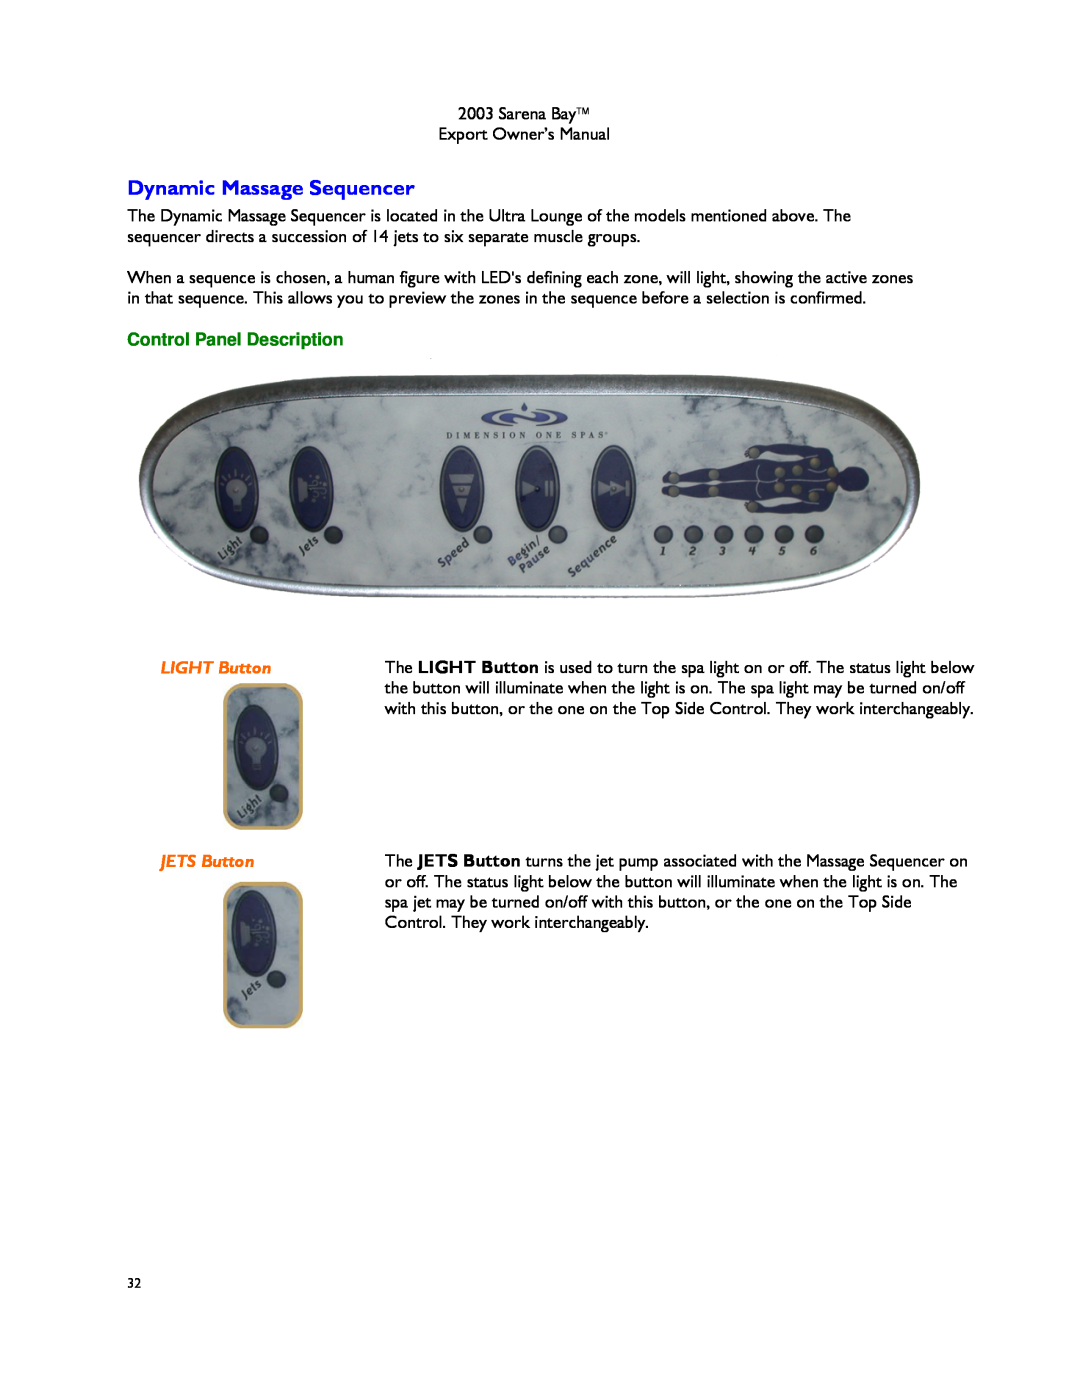 Dimension One Spas Sarena Bay manual Dynamic Massage Sequencer, Control Panel Description, LIGHT Button, JETS Button 